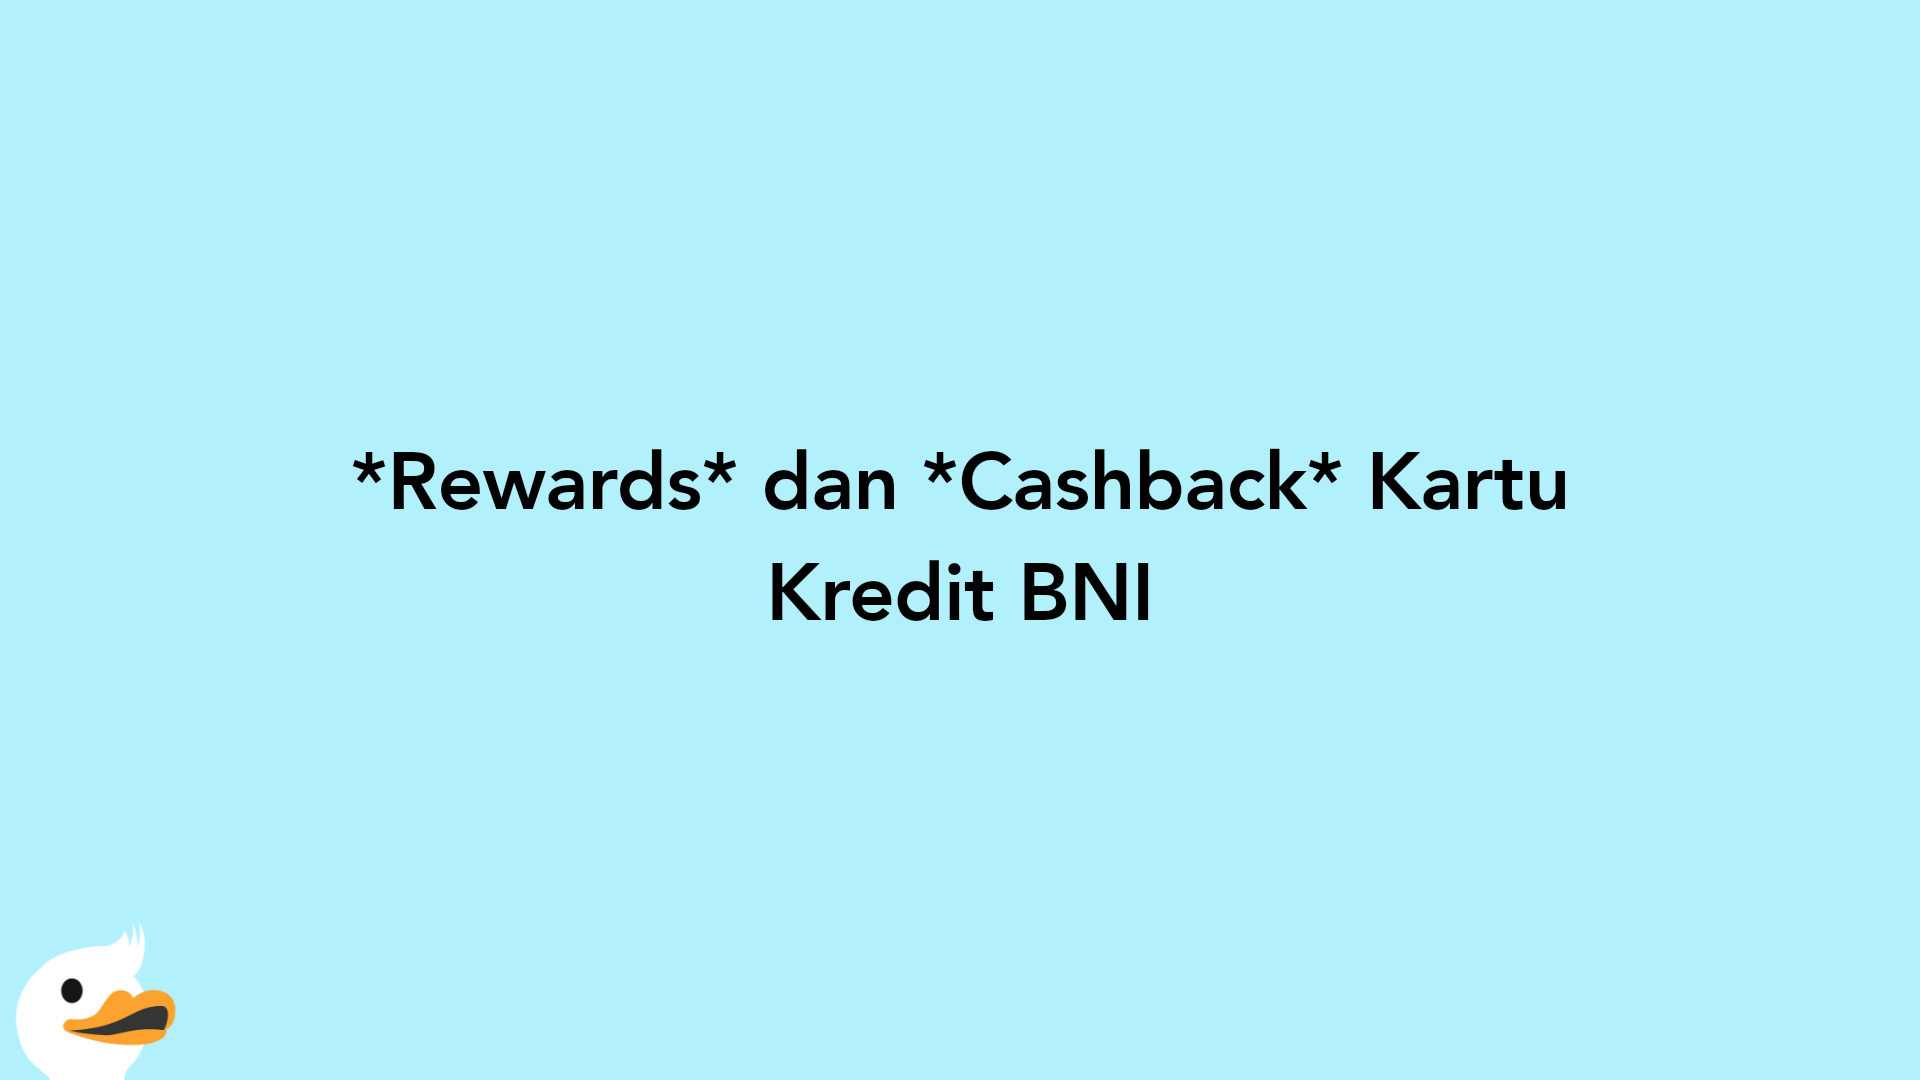 Rewards dan Cashback Kartu Kredit BNI